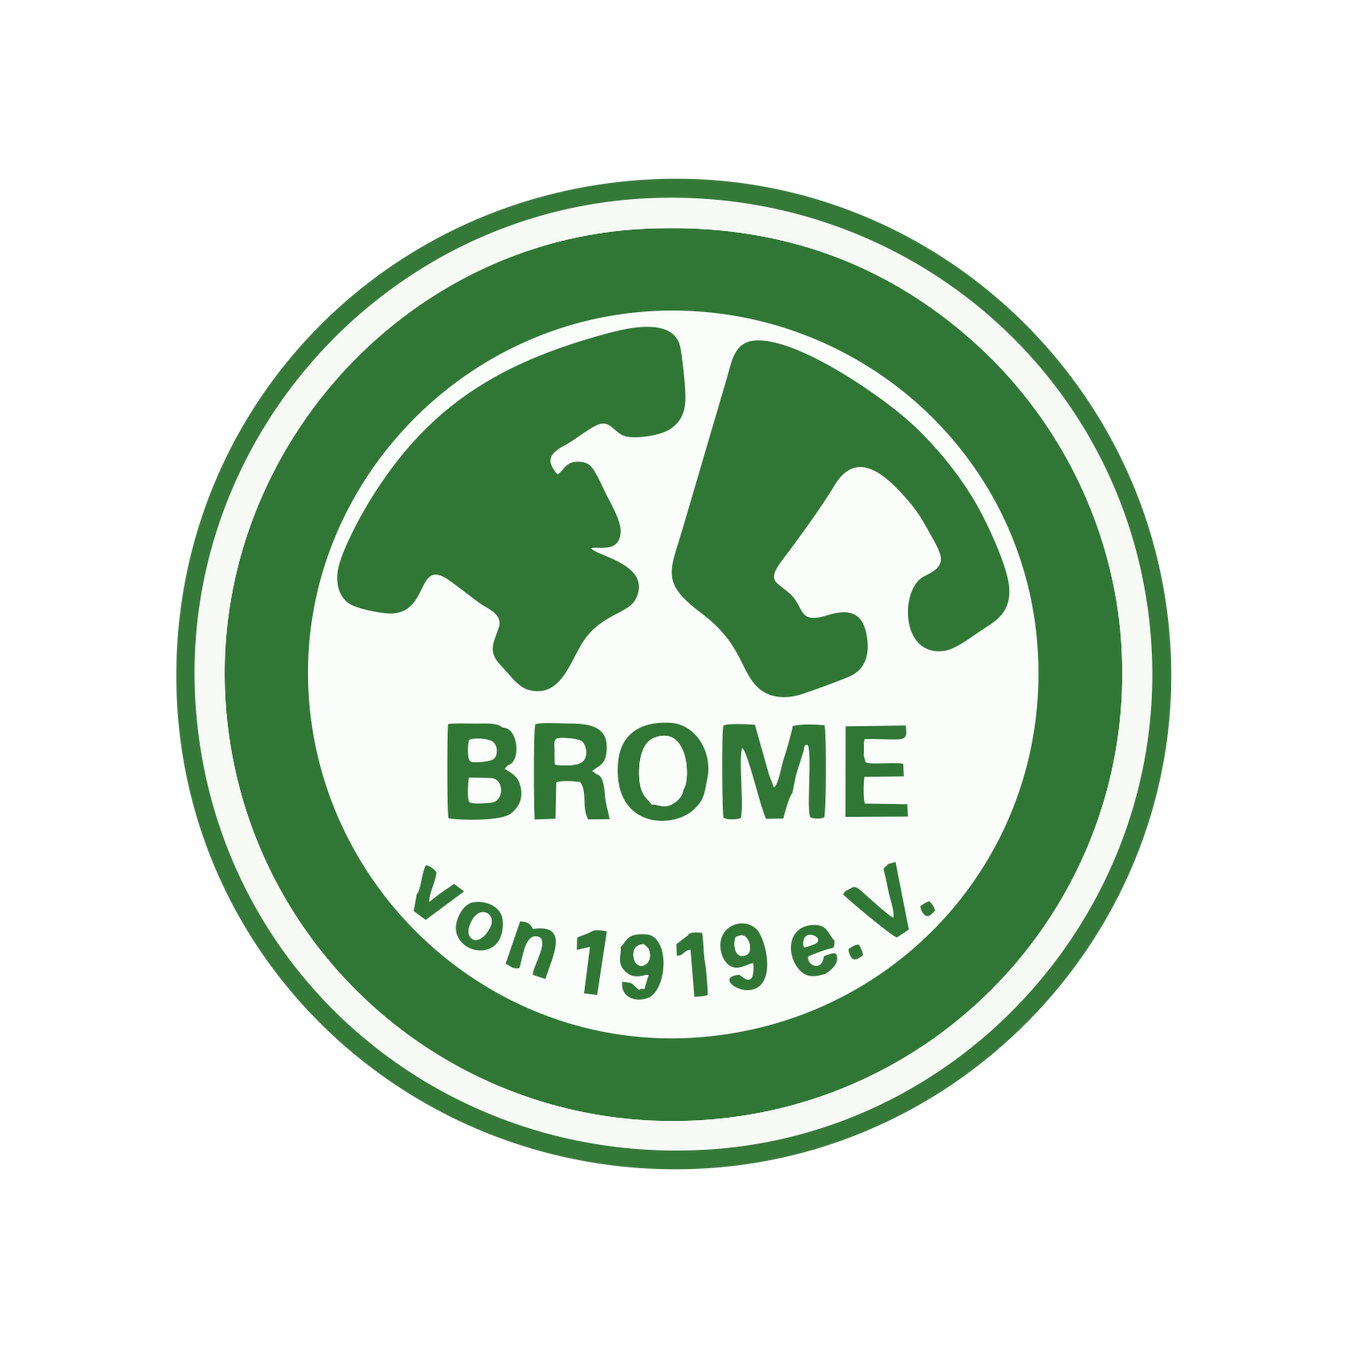 FC Brome 1919 e.V.